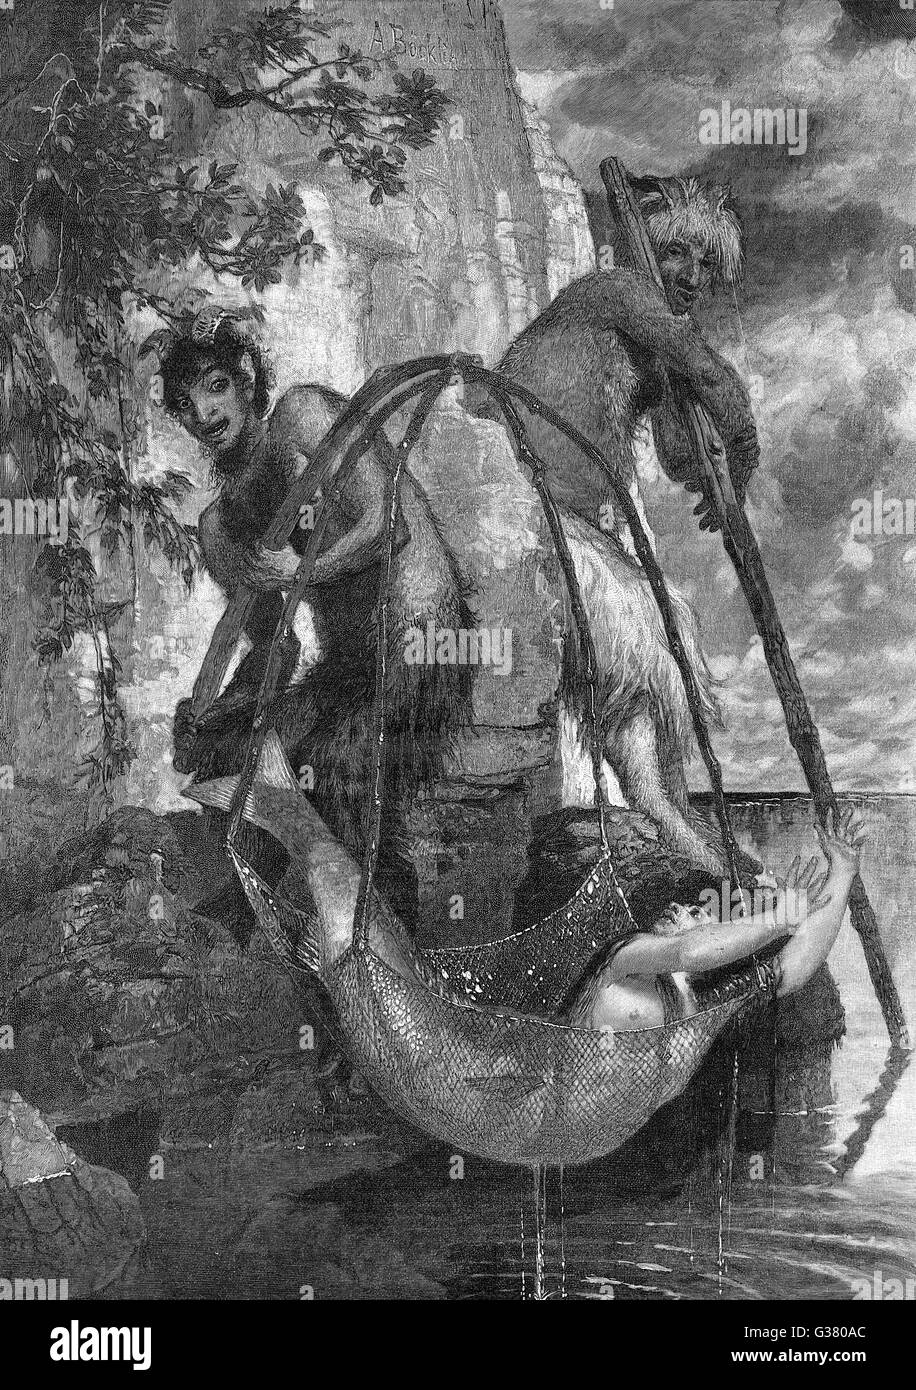 Pan, fishing, nets a mermaid Stock Photo